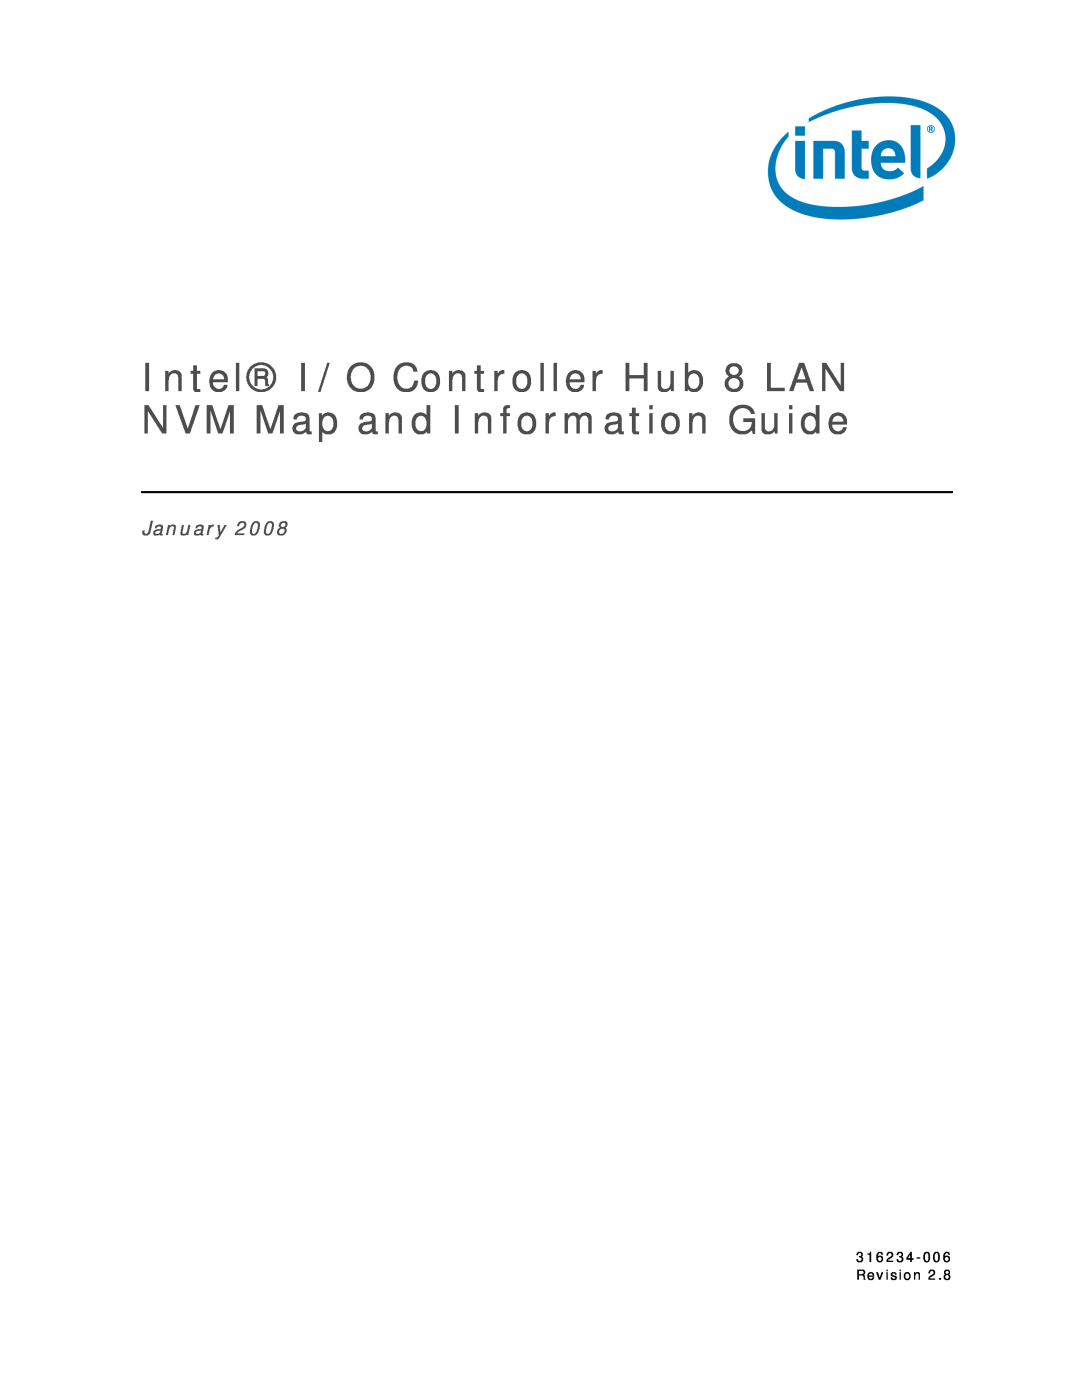 Intel 8 LAN manual January, 316234-006Revision 